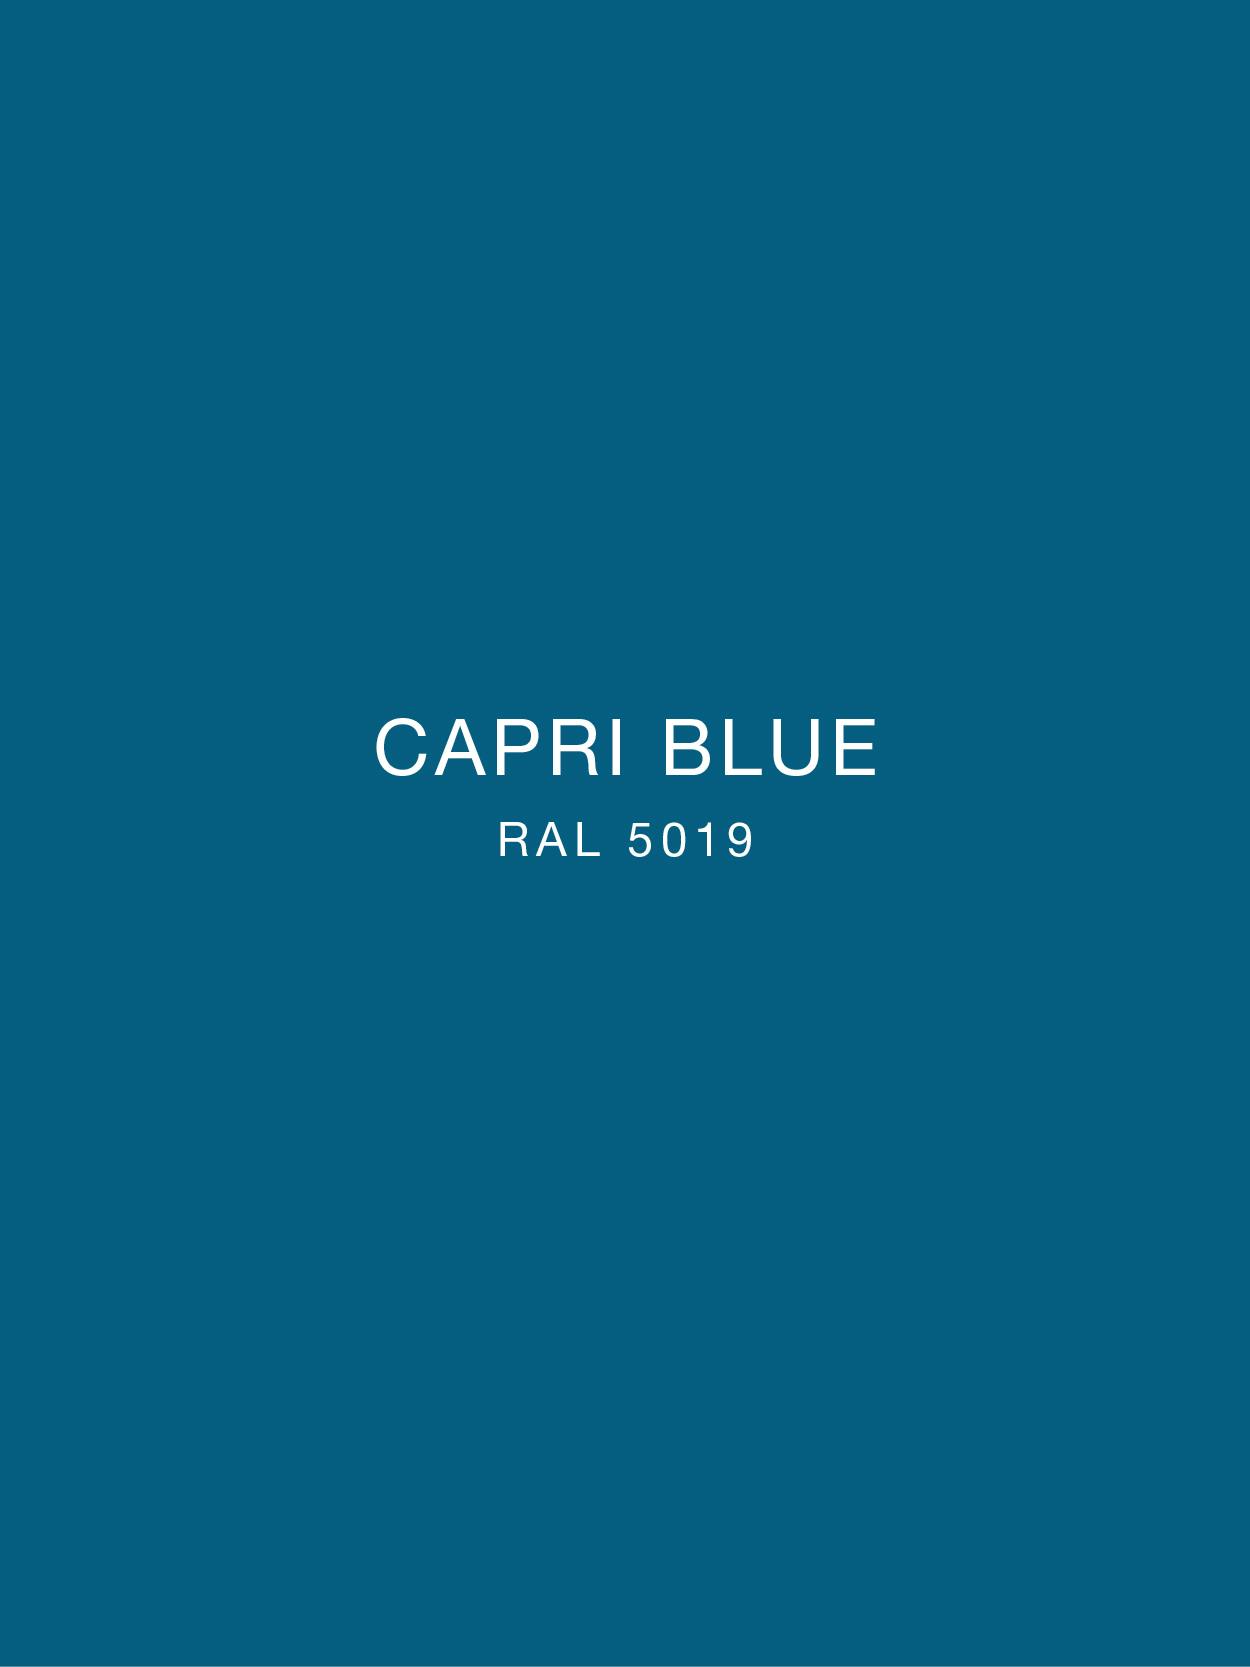 Capri blue RAL 5019